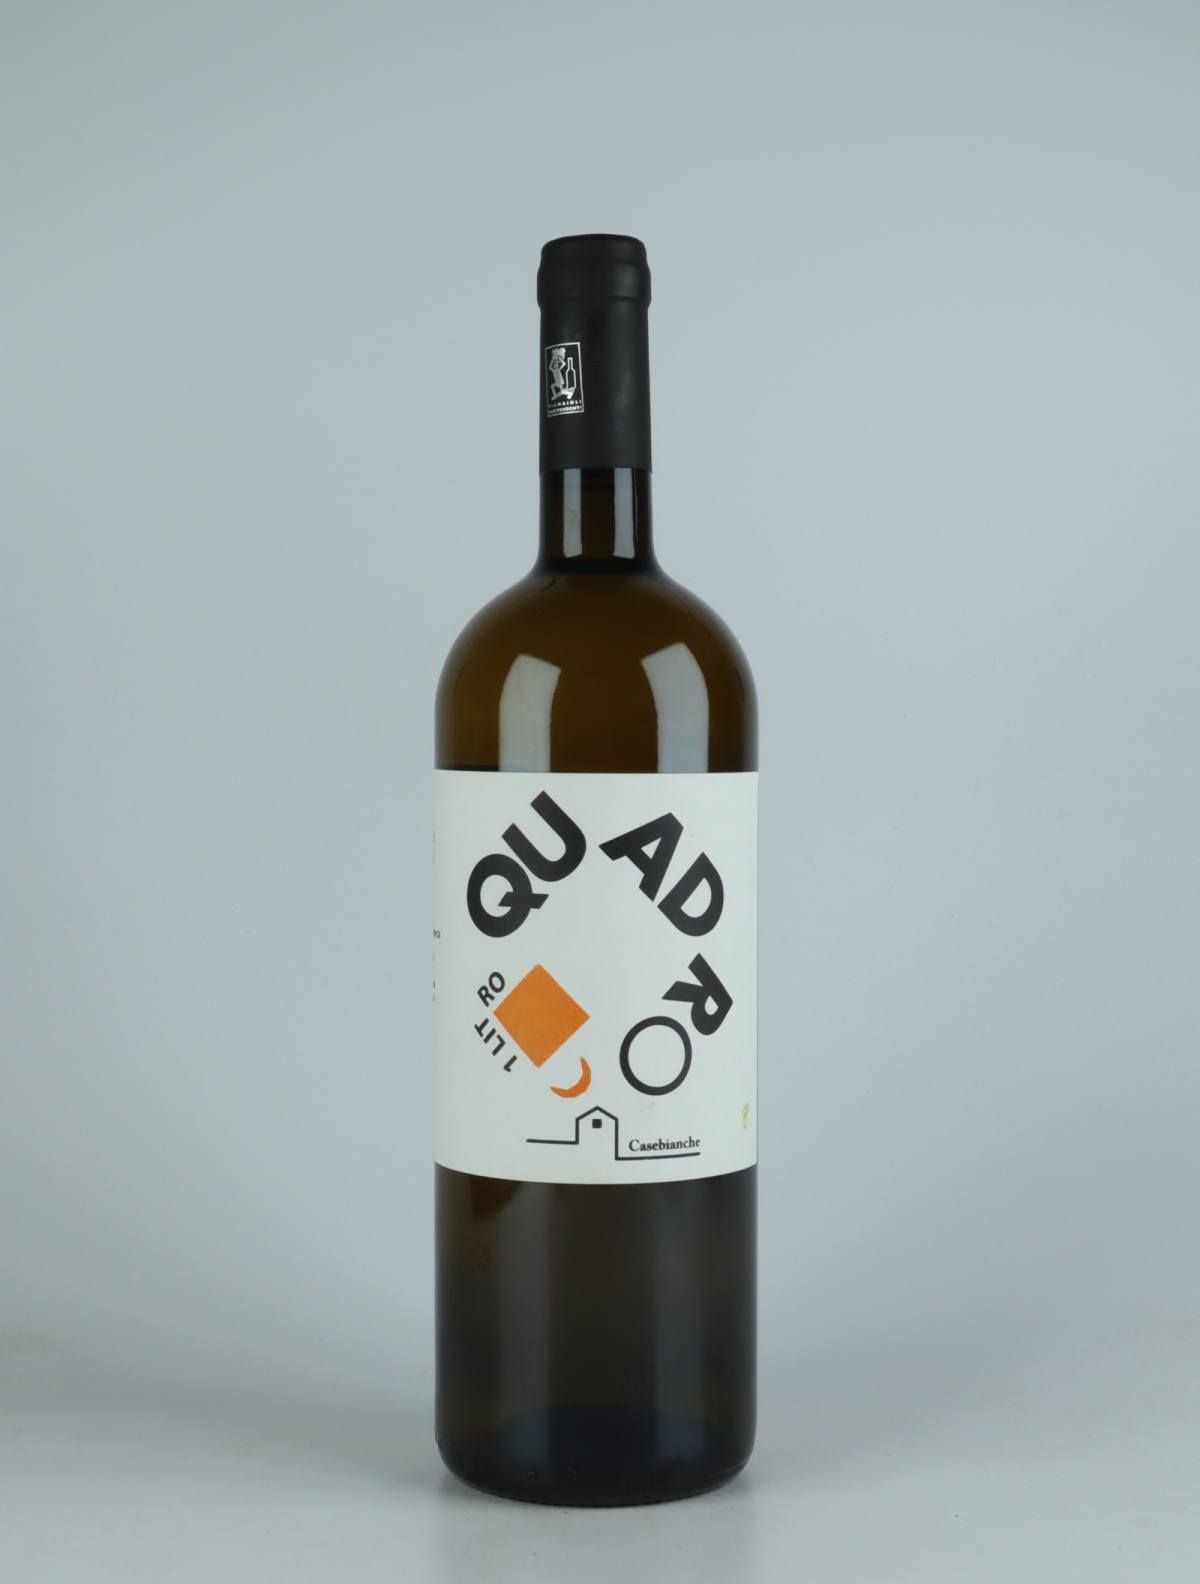 En flaske 2021 Quadro Litro Bianco Hvidvin fra Casebianche, Campanien i Italien